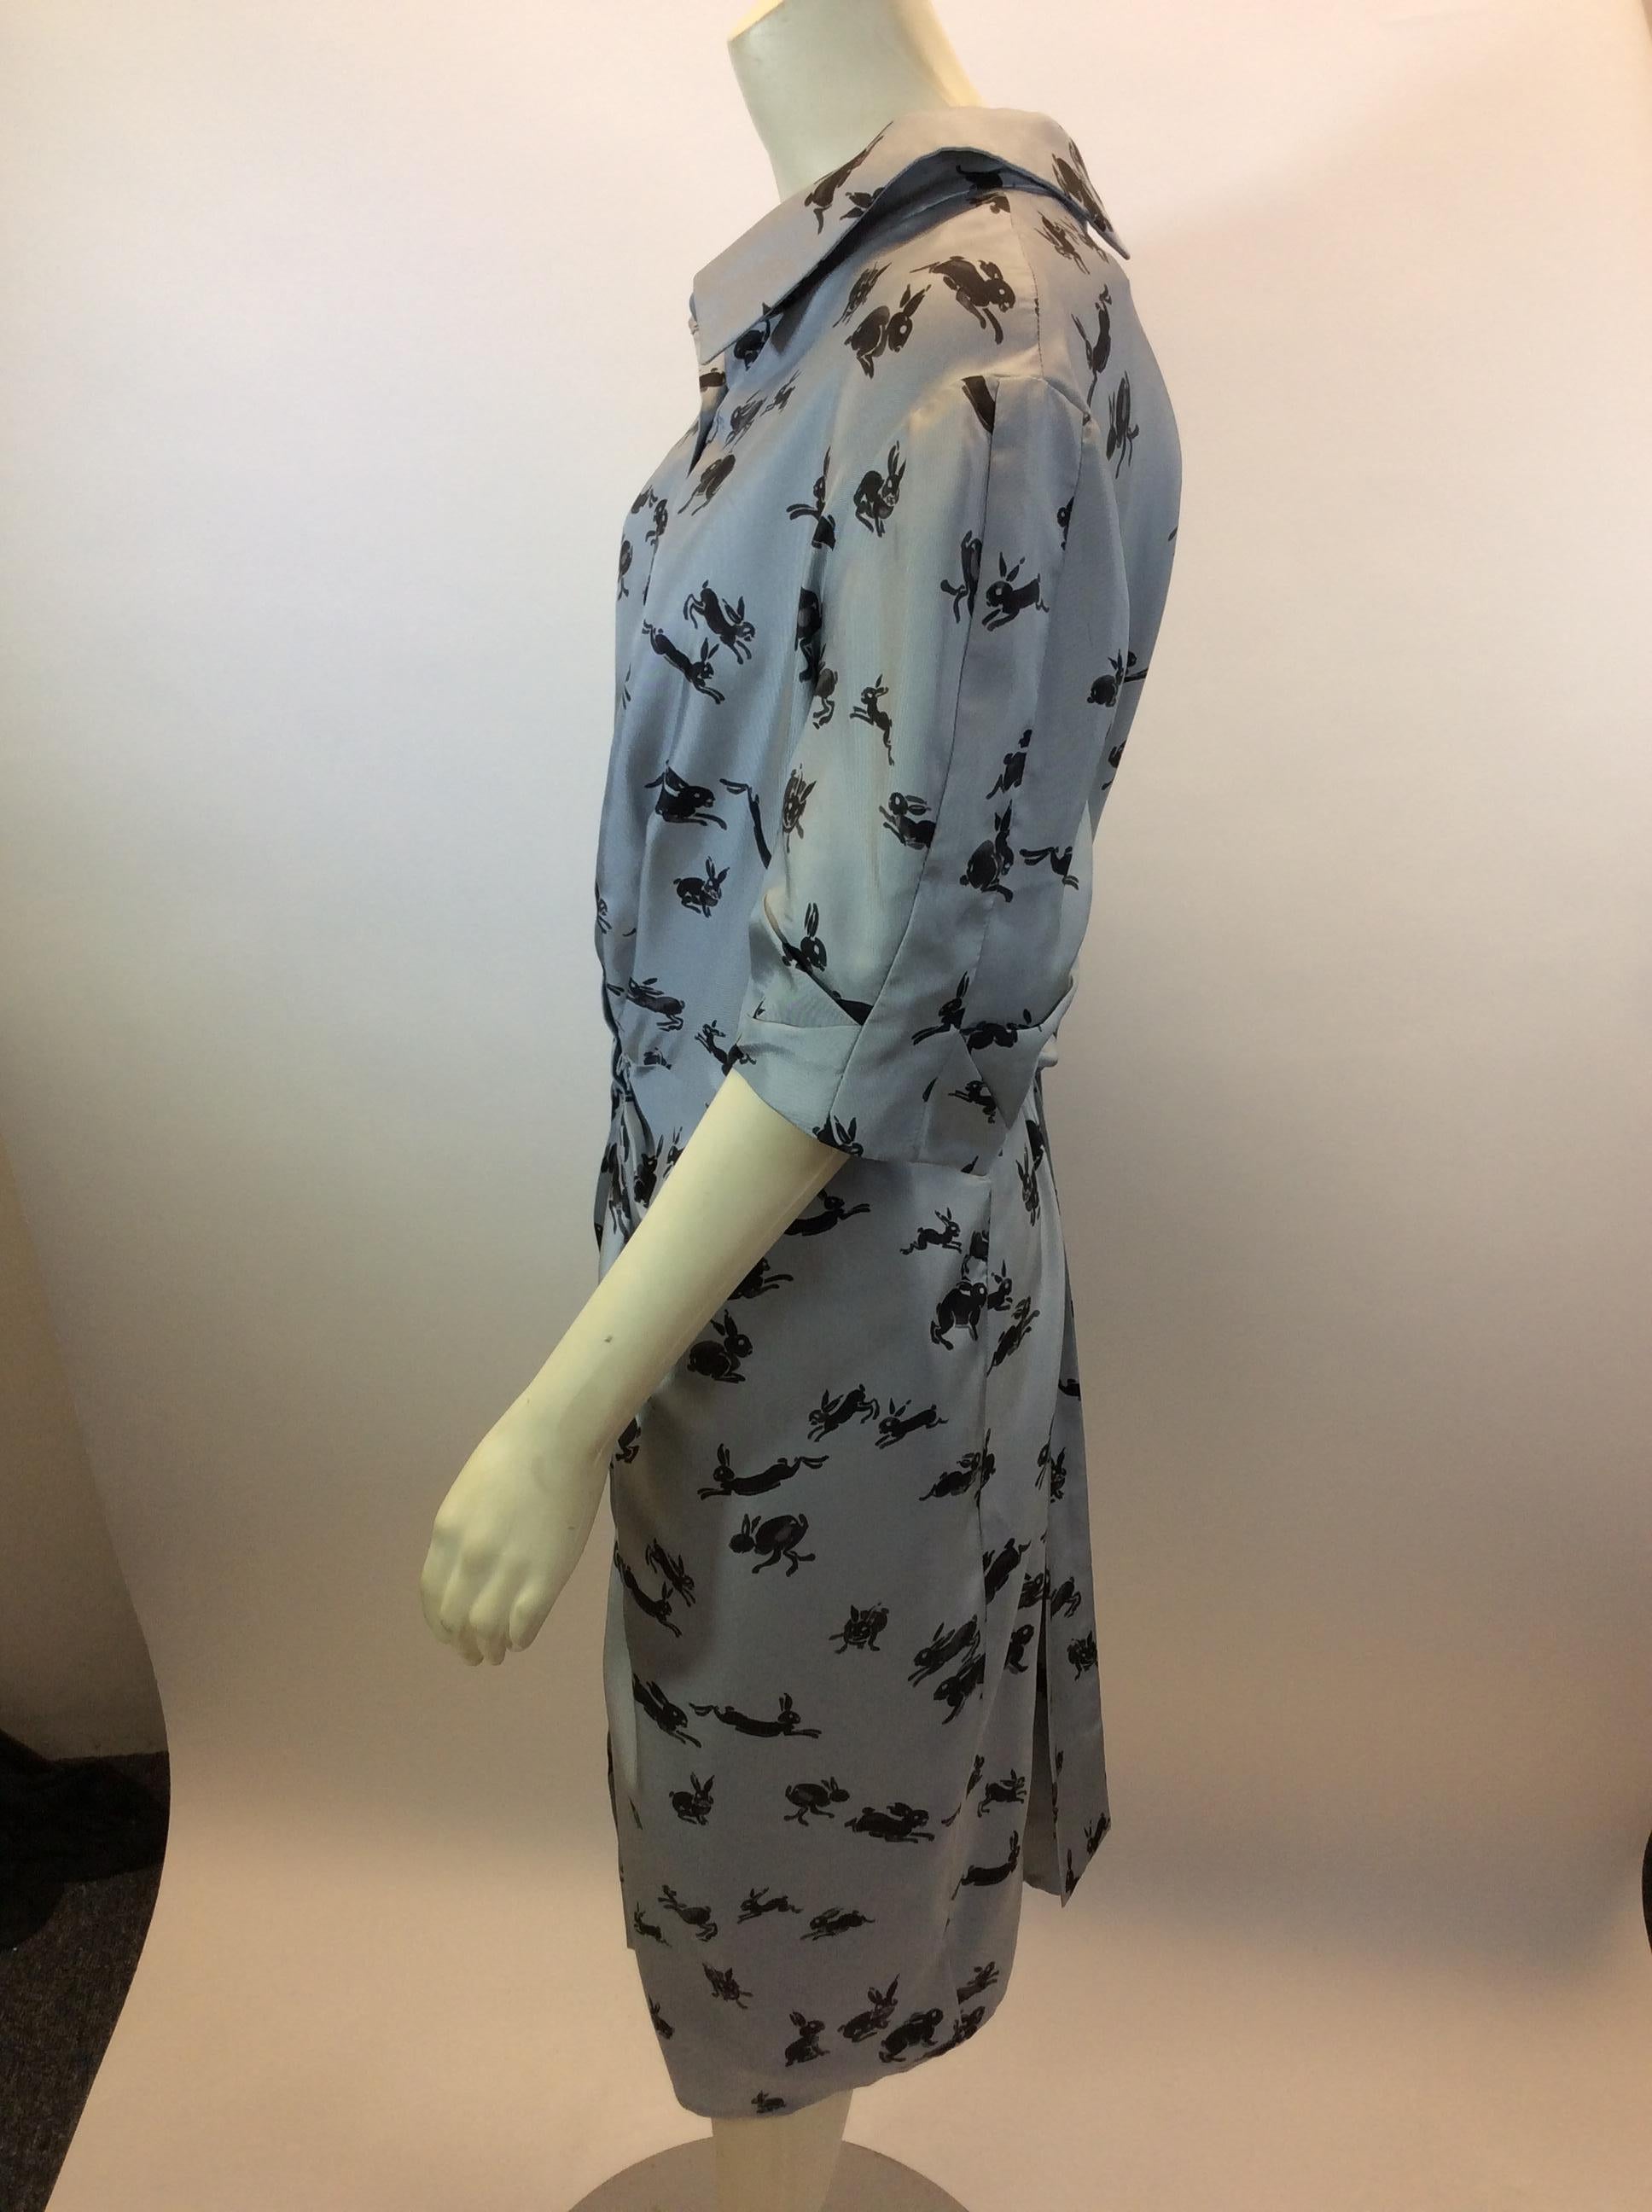 Carolina Herrera Blue Bunny Print Dress
Made in the US
100% Silk
Length 42